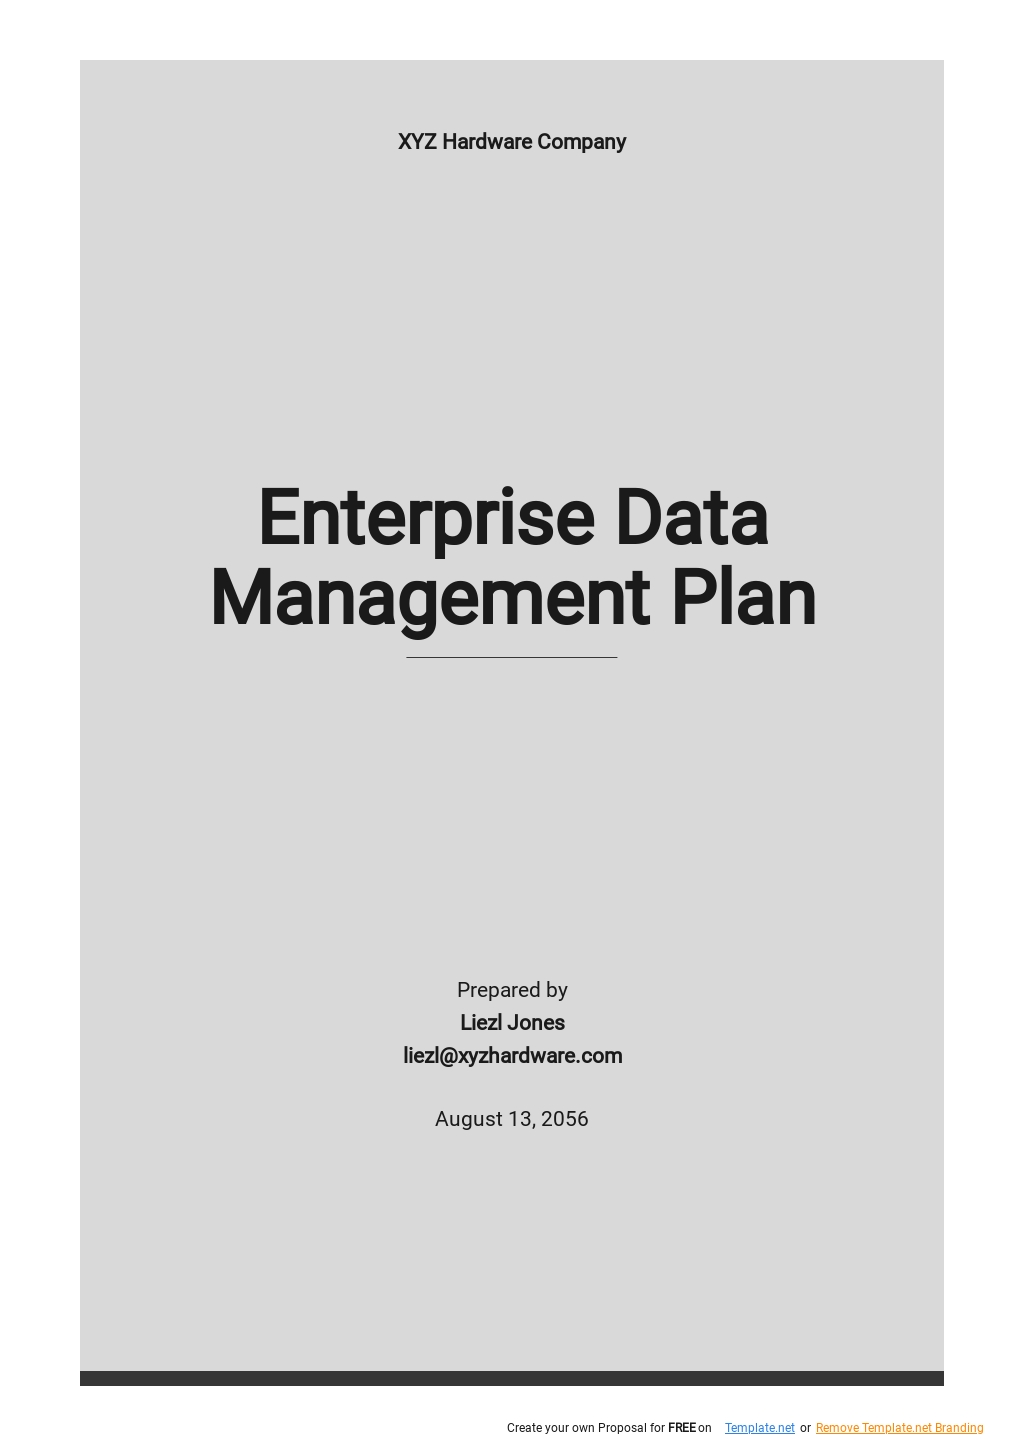 Enterprise Data Management Plan Template 